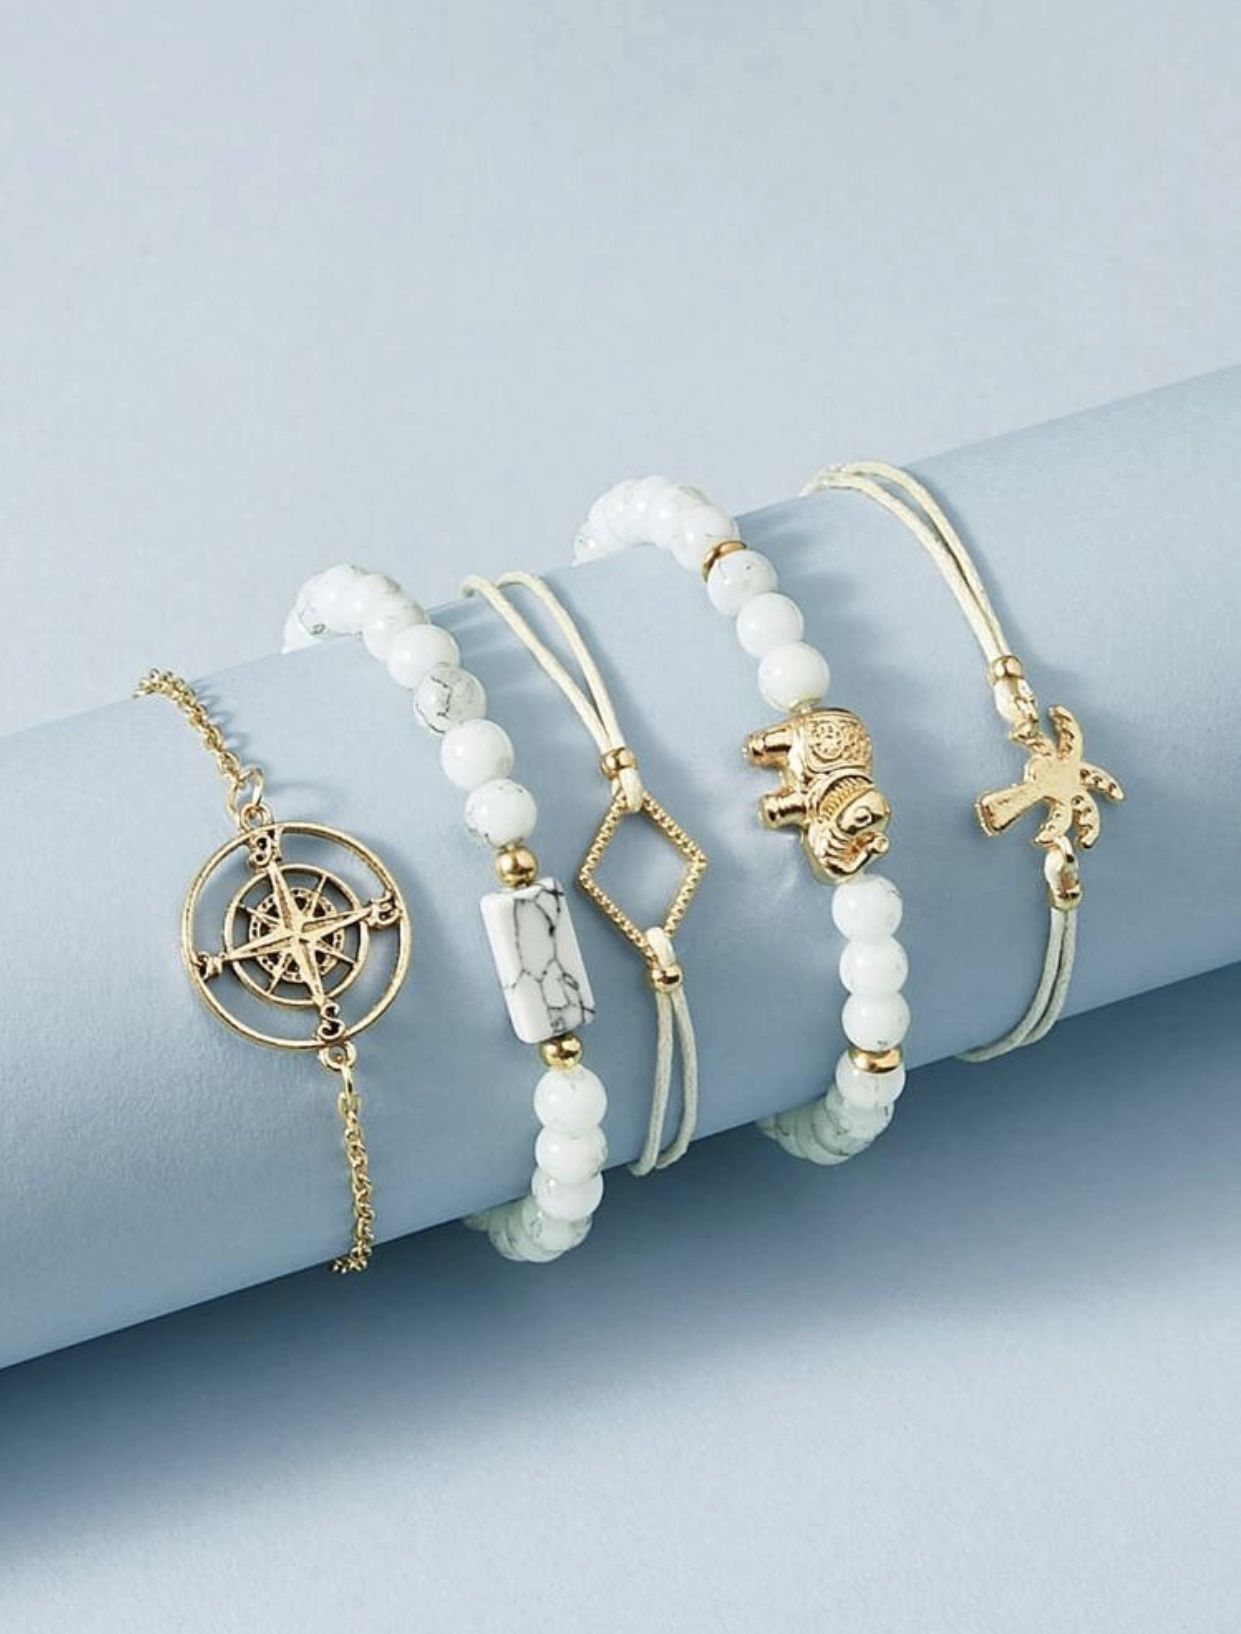 Gorgeous NEW 5 piece compass, elephant and palm tree bracelet set